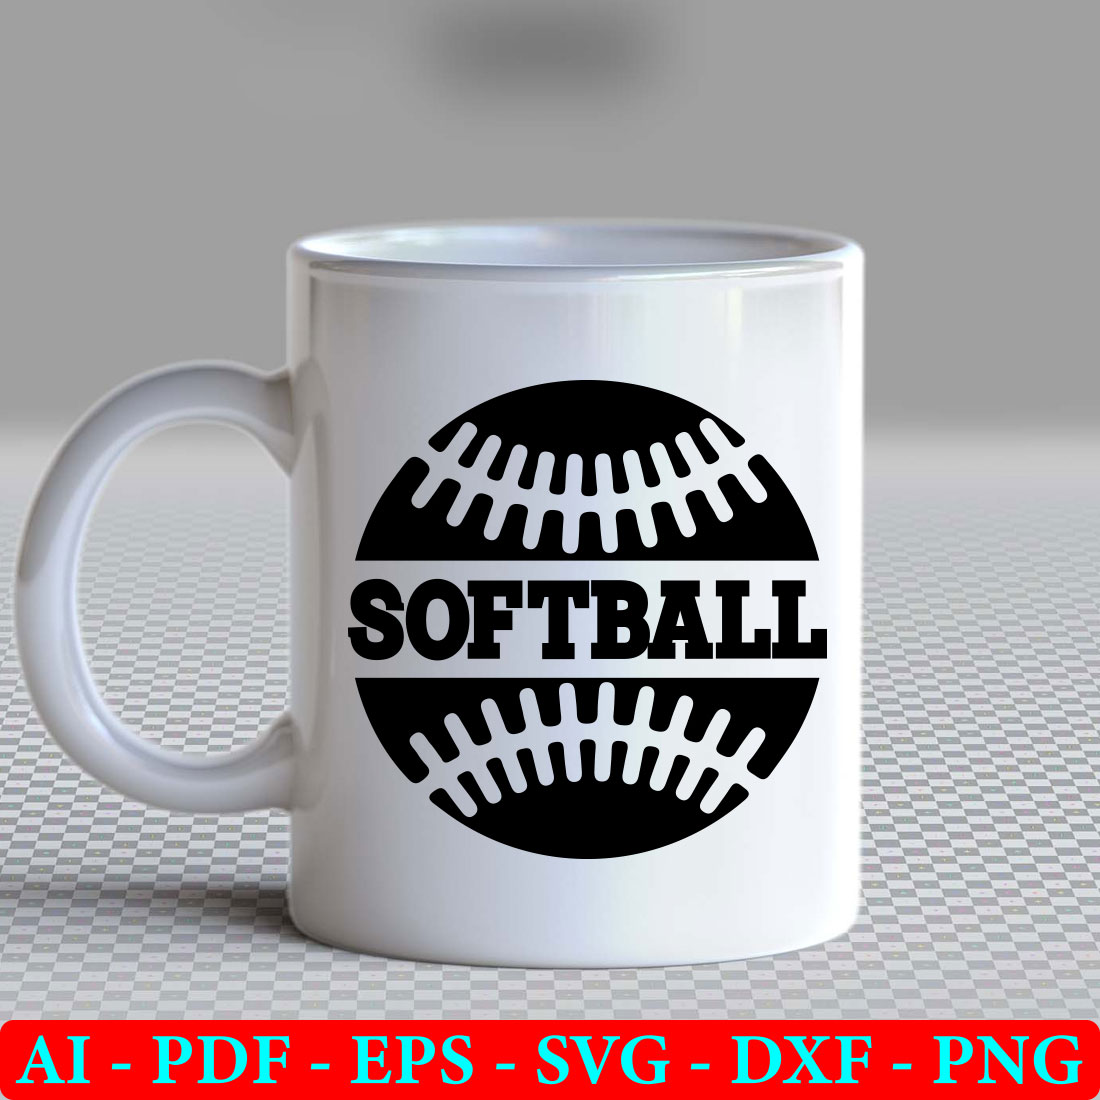 White coffee mug with a black softball on it.